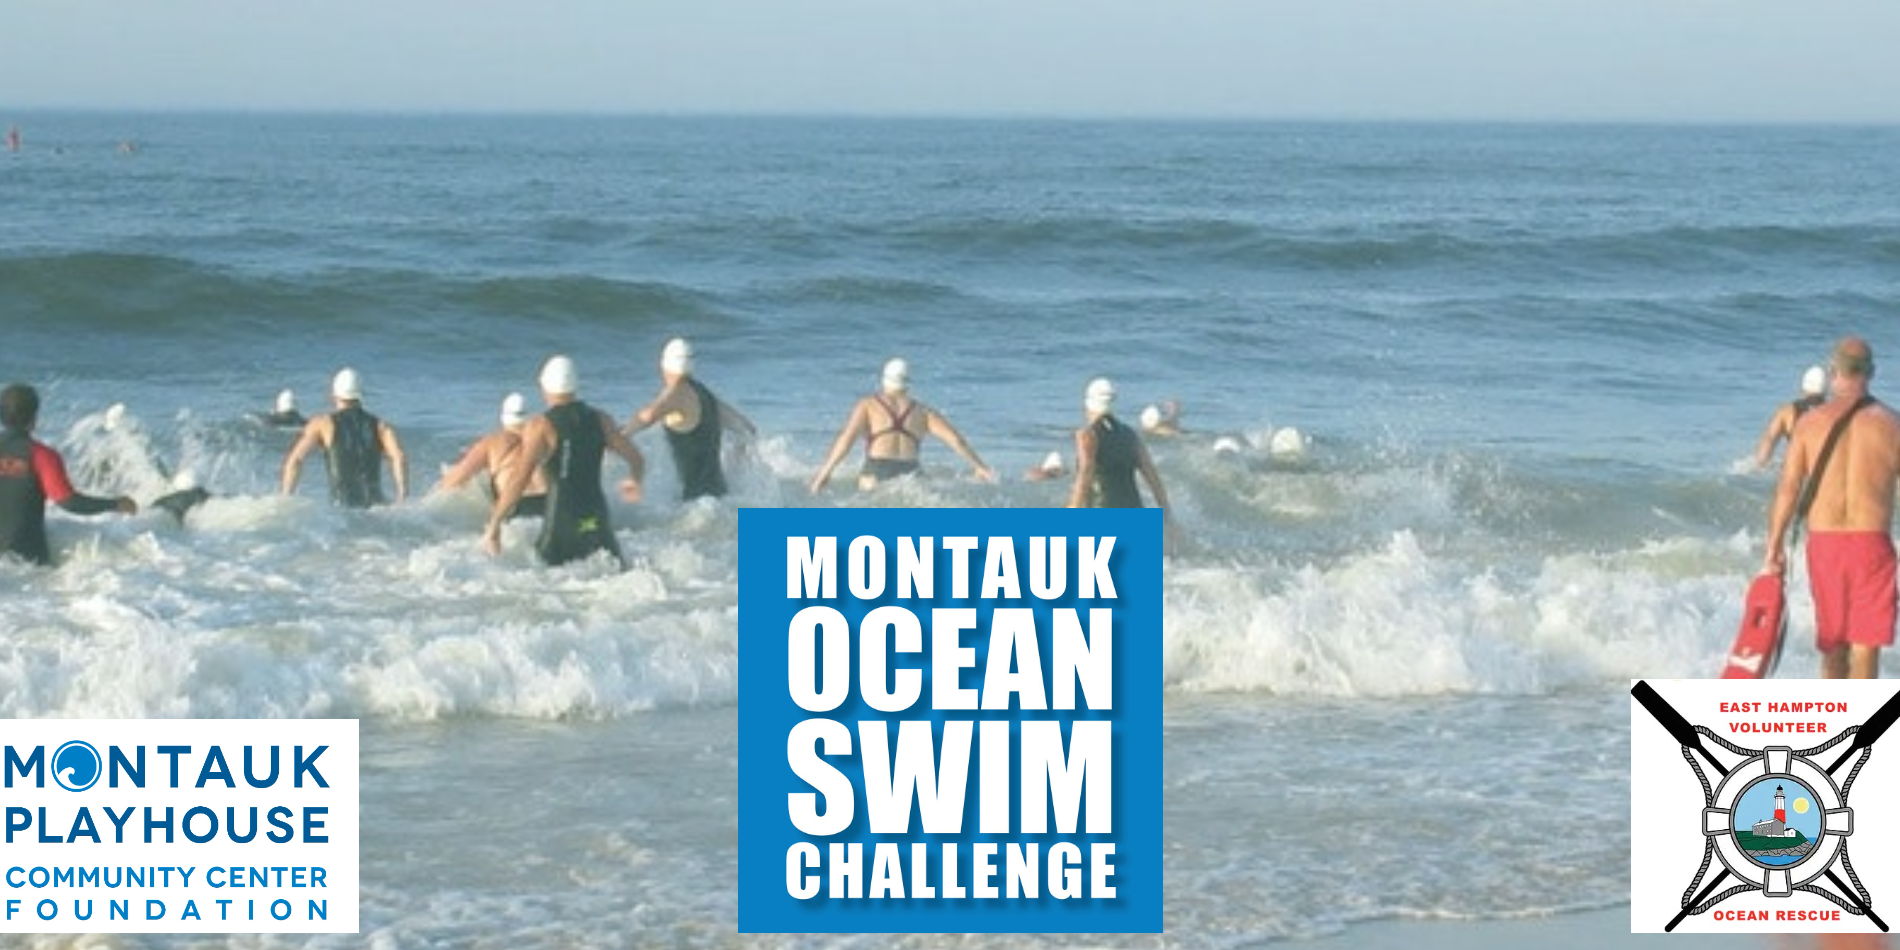 Montauk Ocean Swim Challenge promotional image